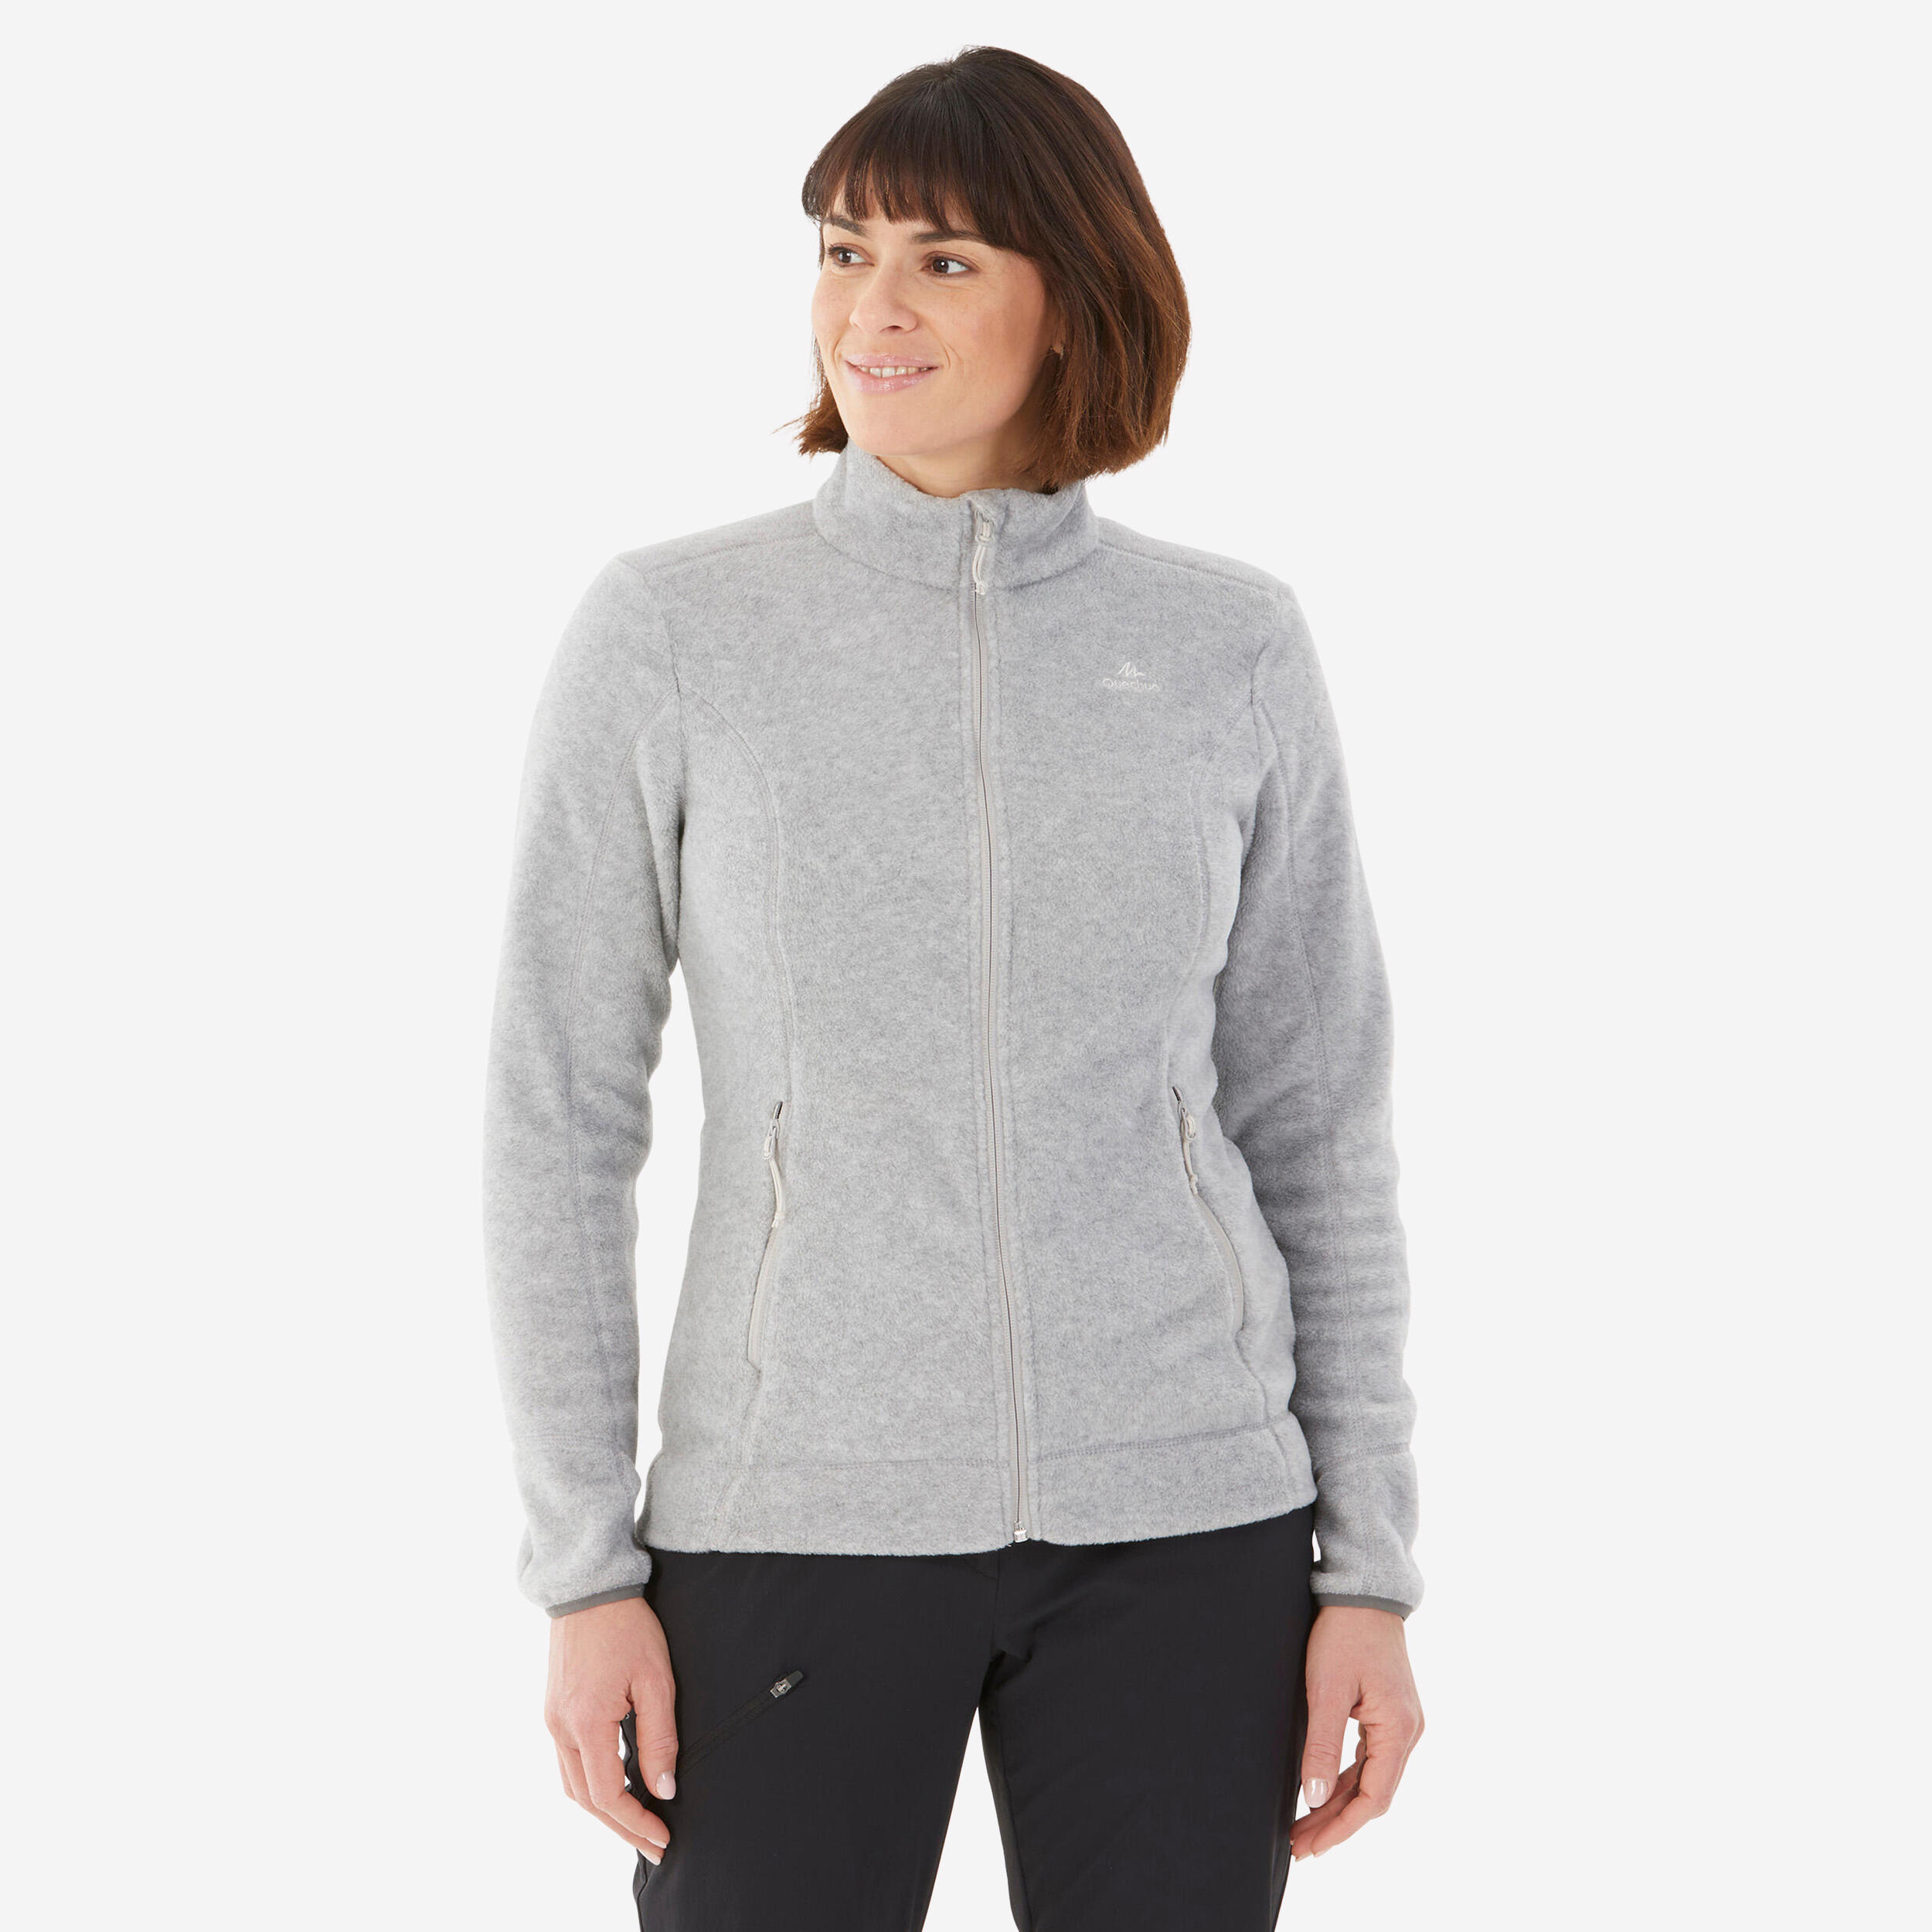 Women's Fleece Hiking Sweatshirt - MH 120 Grey - Light grey - Quechua -  Decathlon